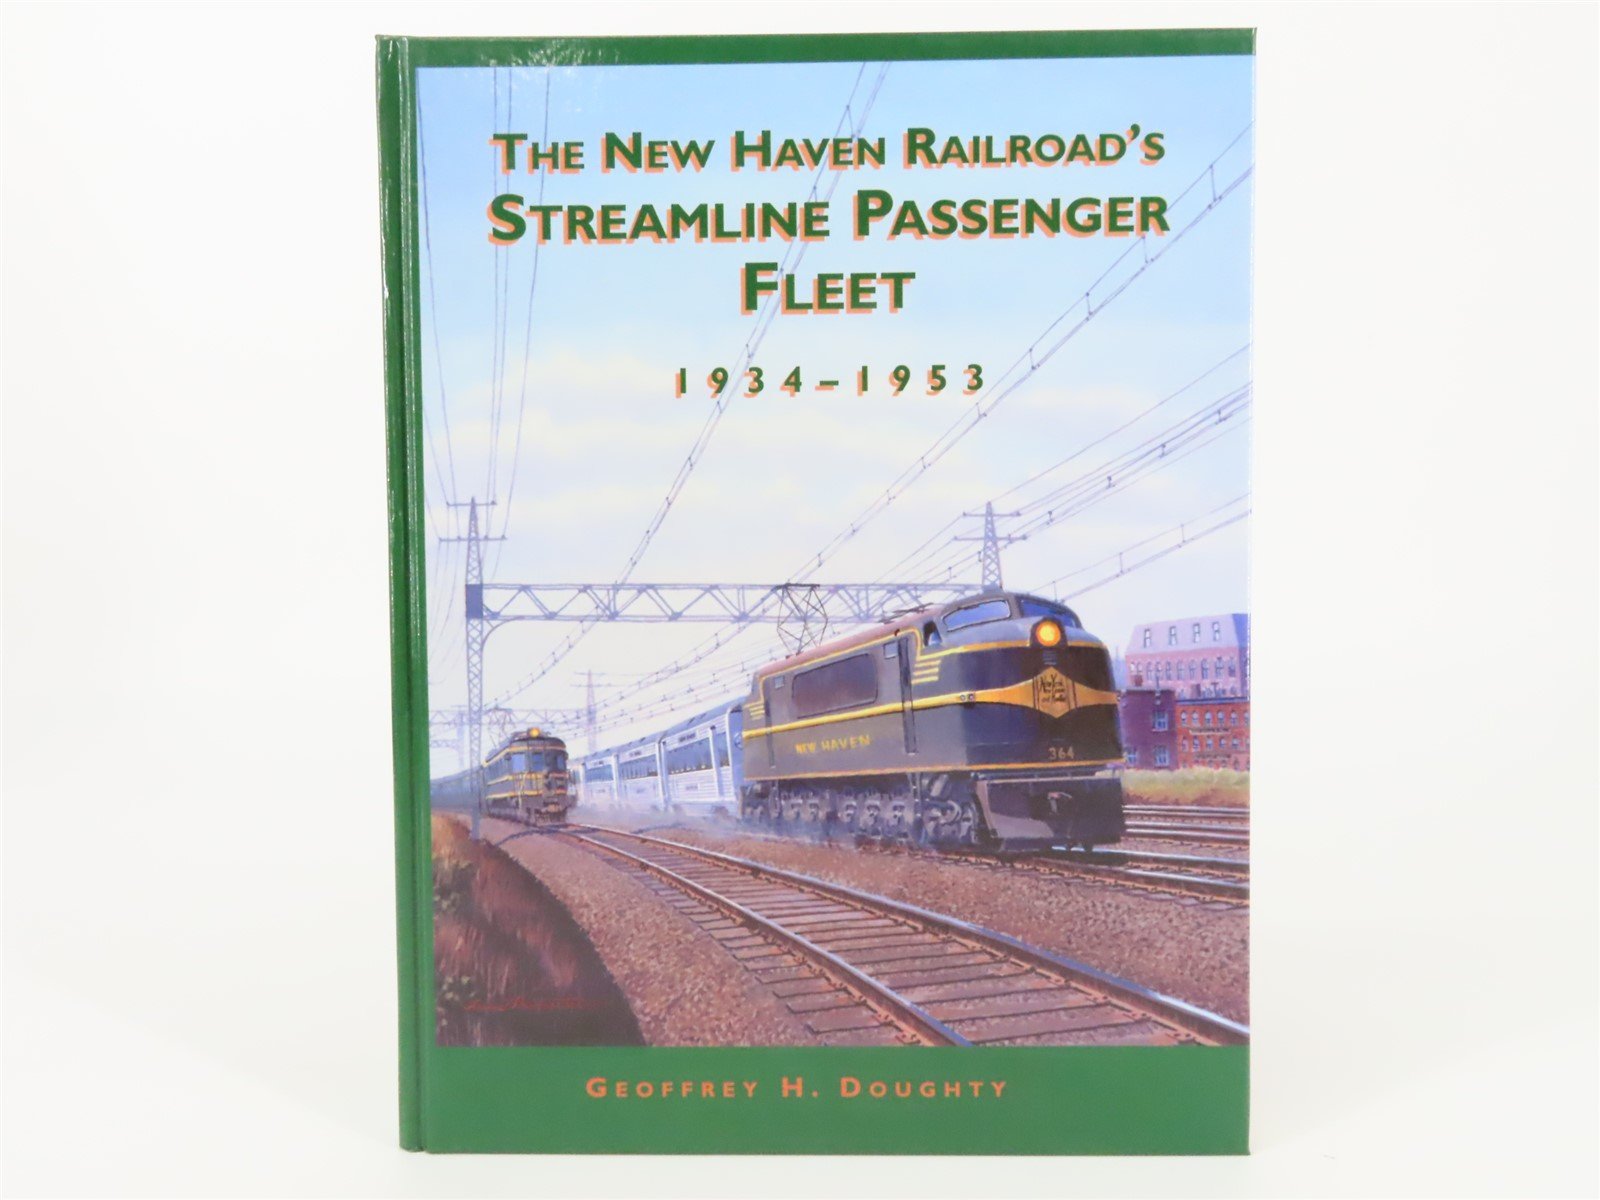 The New Haven Railroad's Streamline Passenger Fleet 1934-1953 by Doughty ©2000